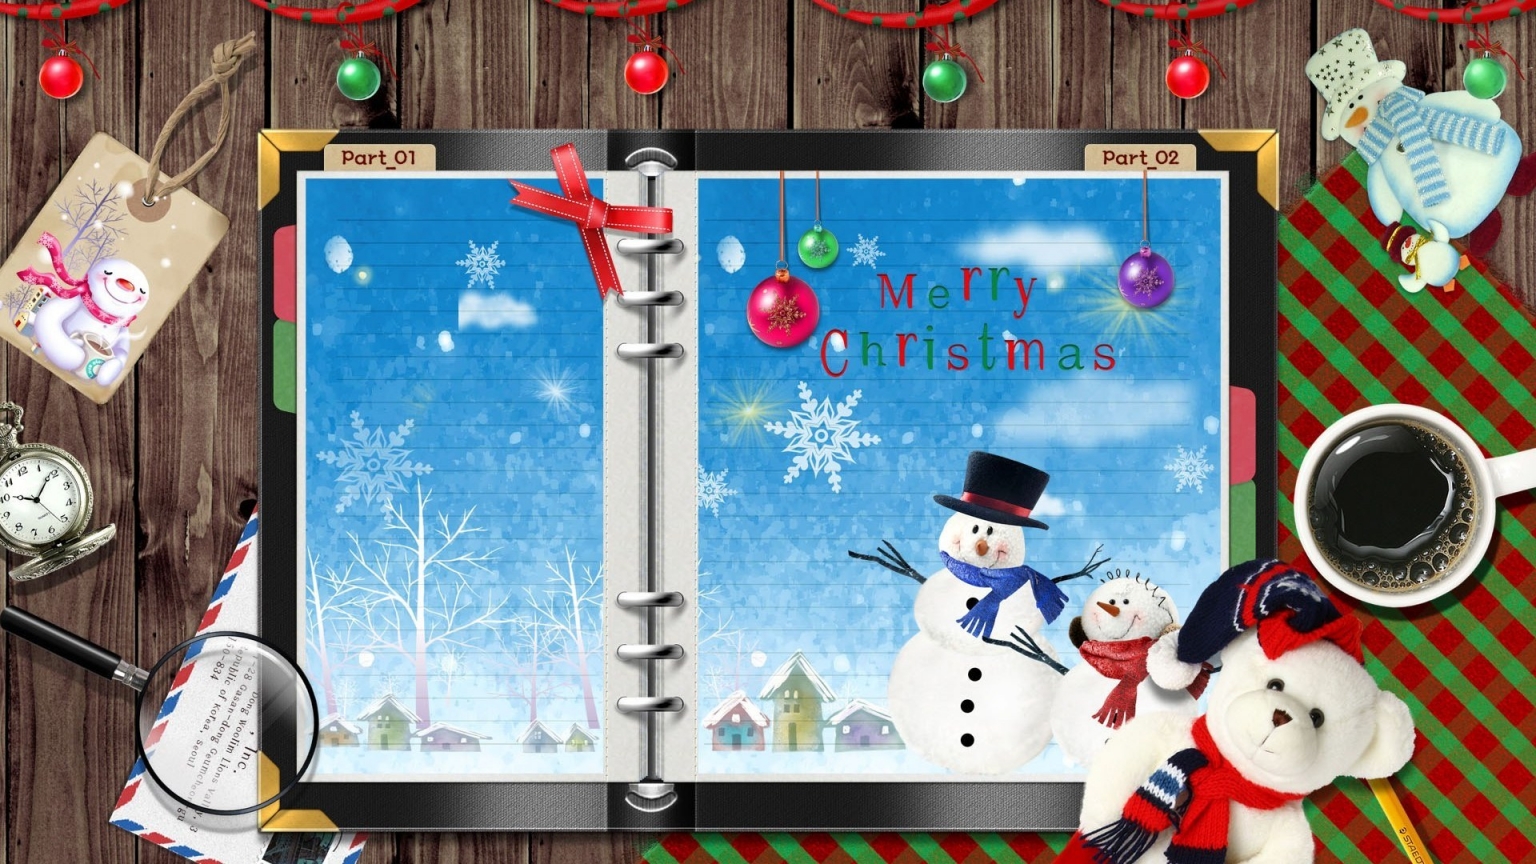 Snowman Christmas Card for 1536 x 864 HDTV resolution